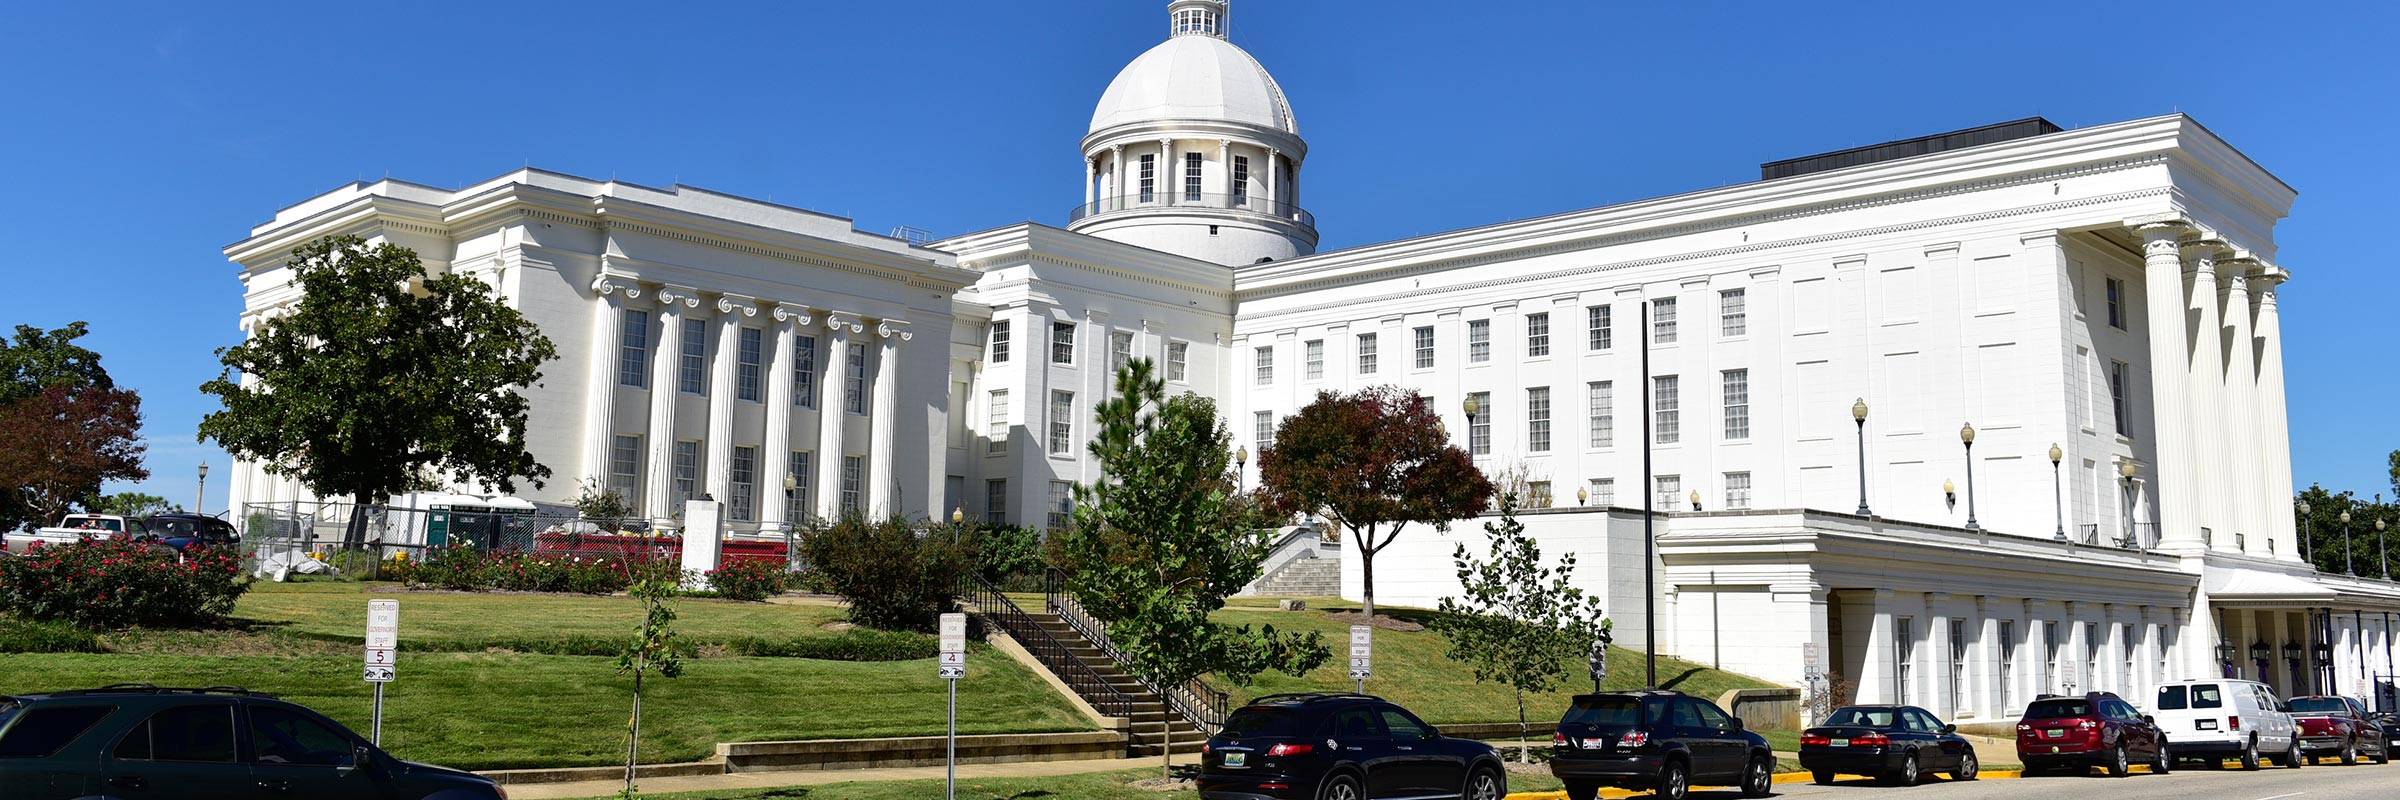 Alabama State Capitol building, Montgomery, USA